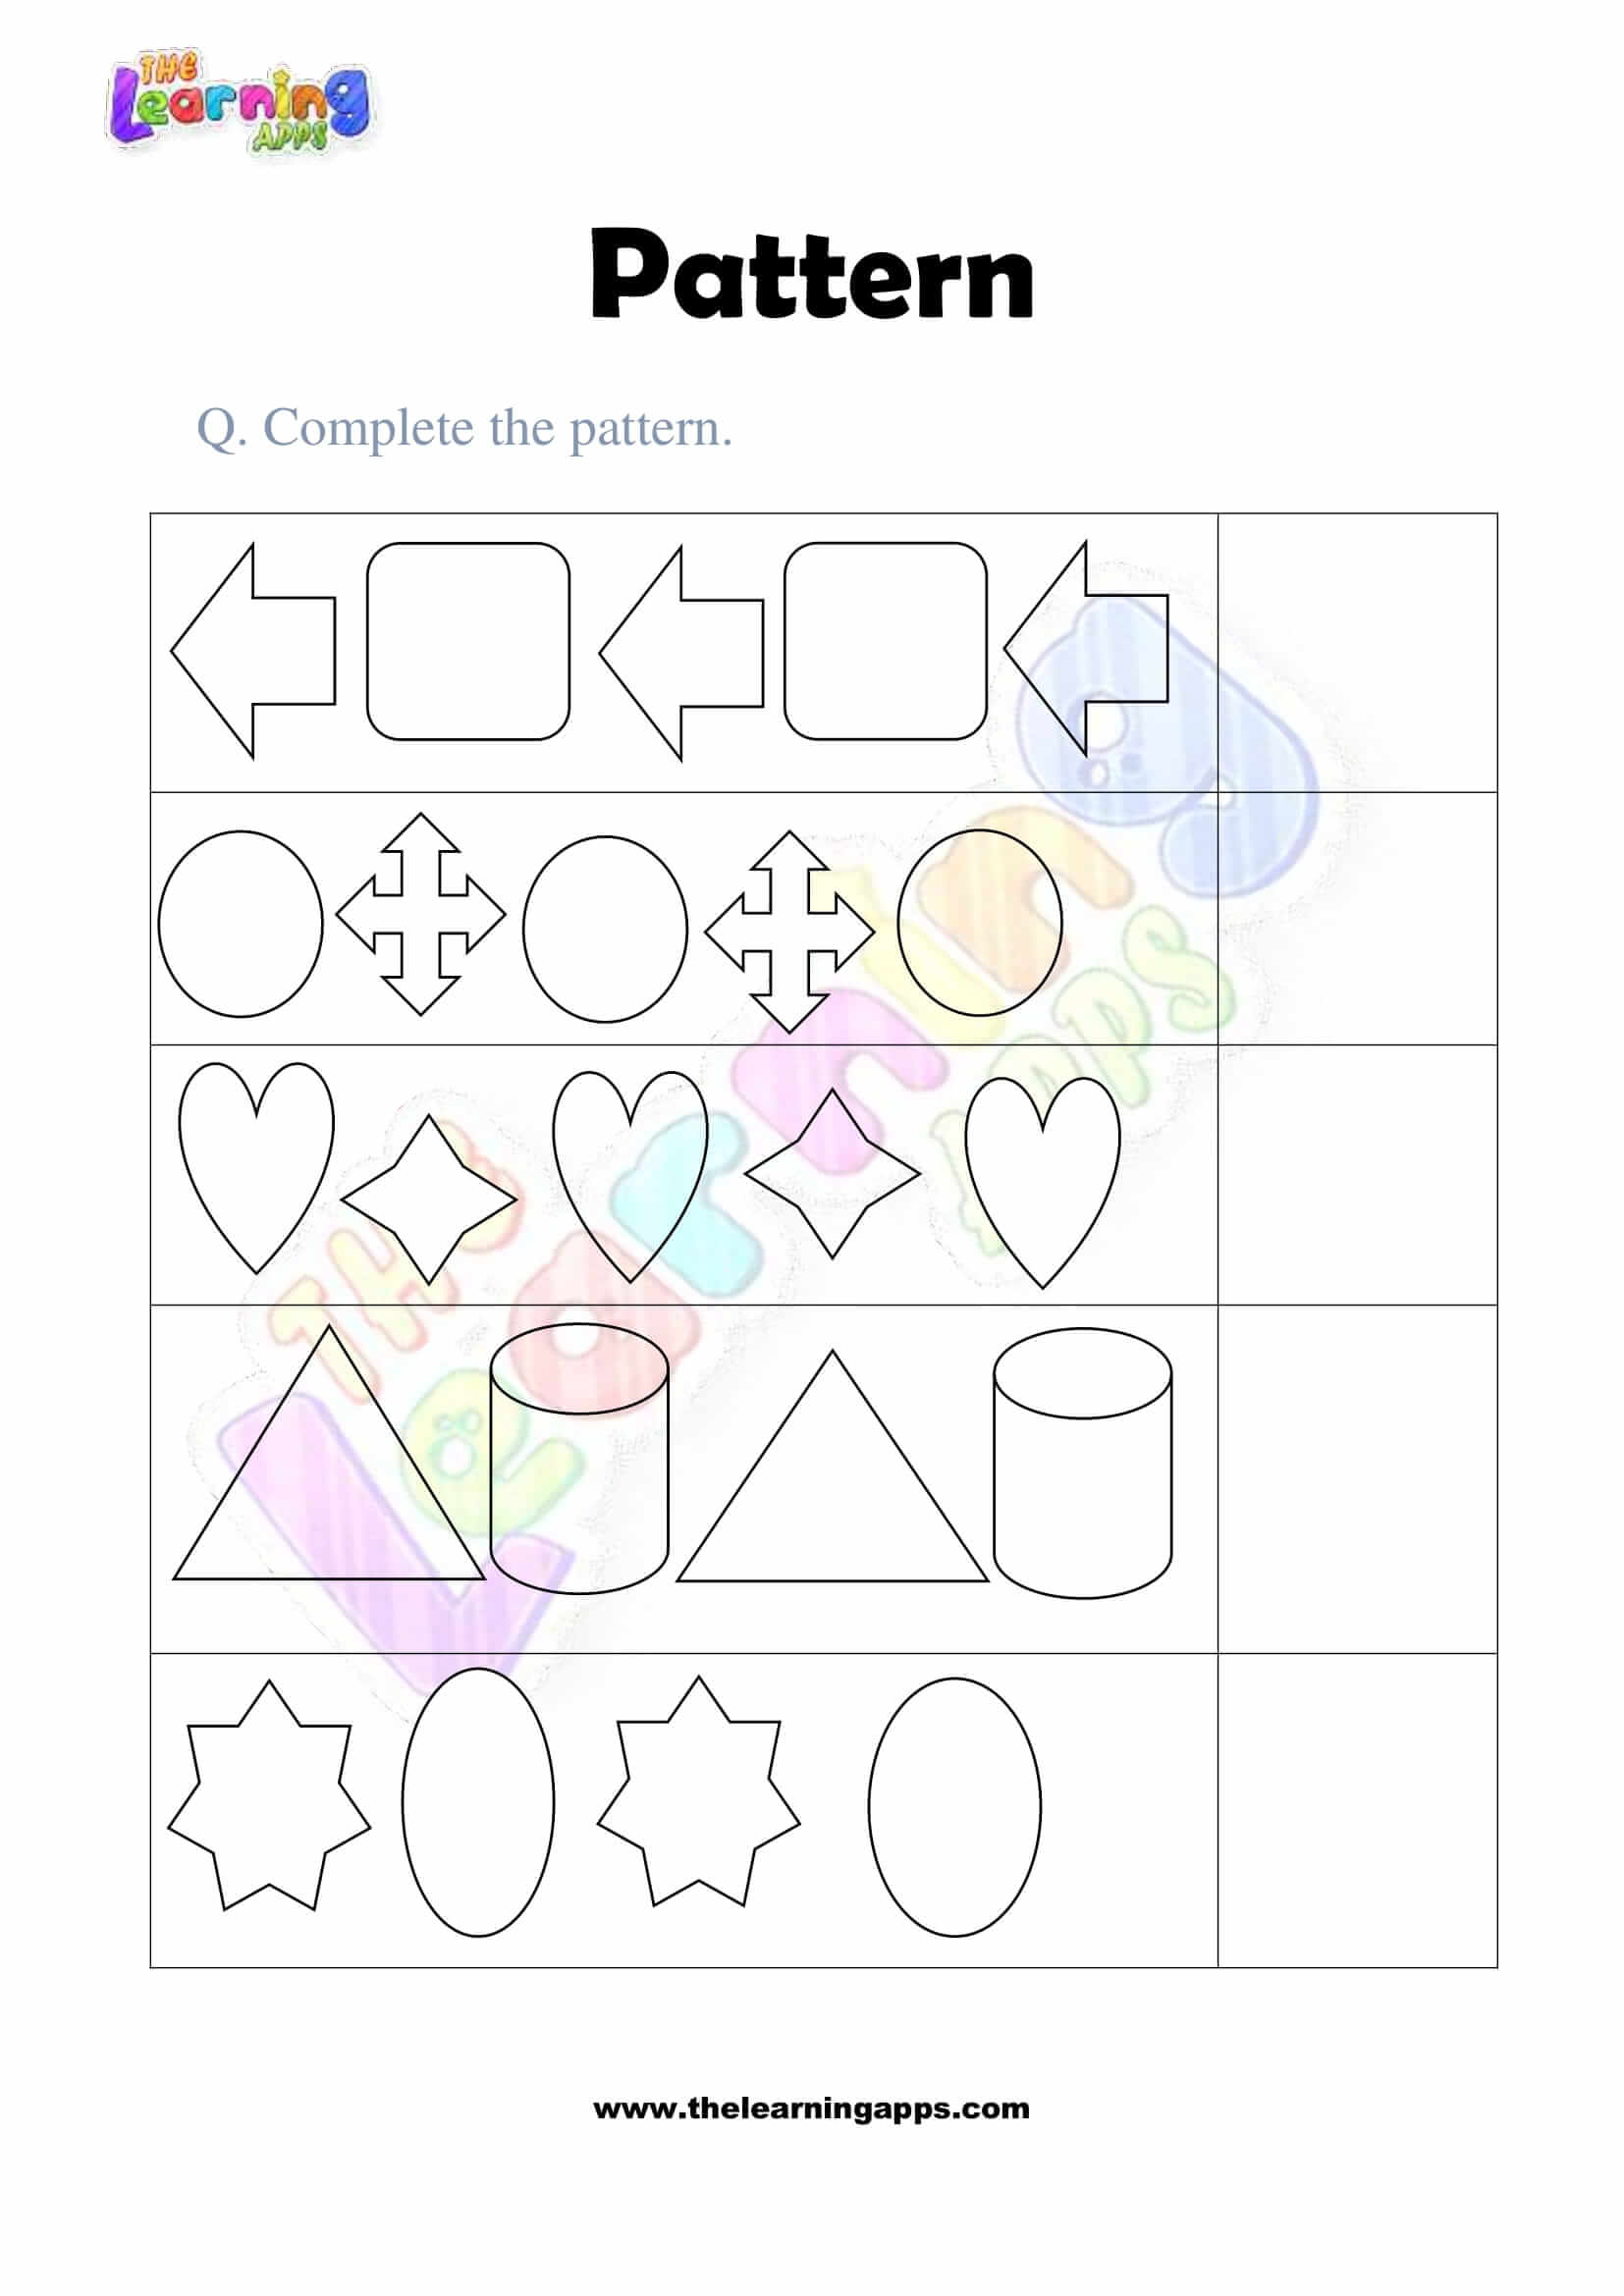 Pattern Worksheet - Grade 2 - Activity 6